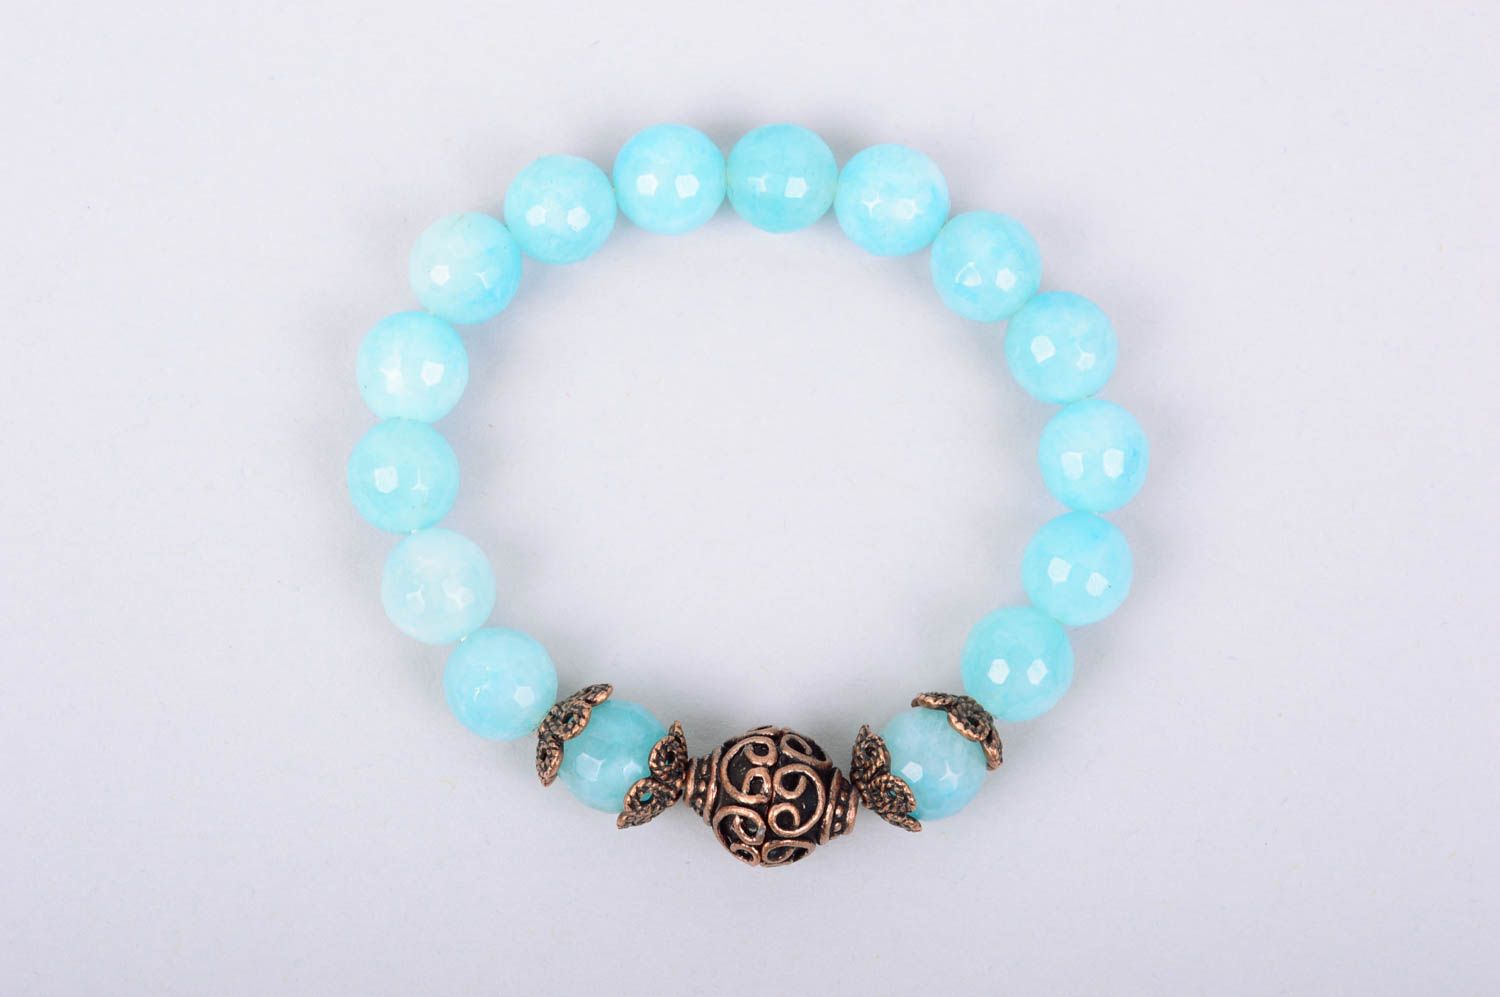 Gemstone jewelry handmade bracelet bead jewelry bracelets for women gift ideas photo 1